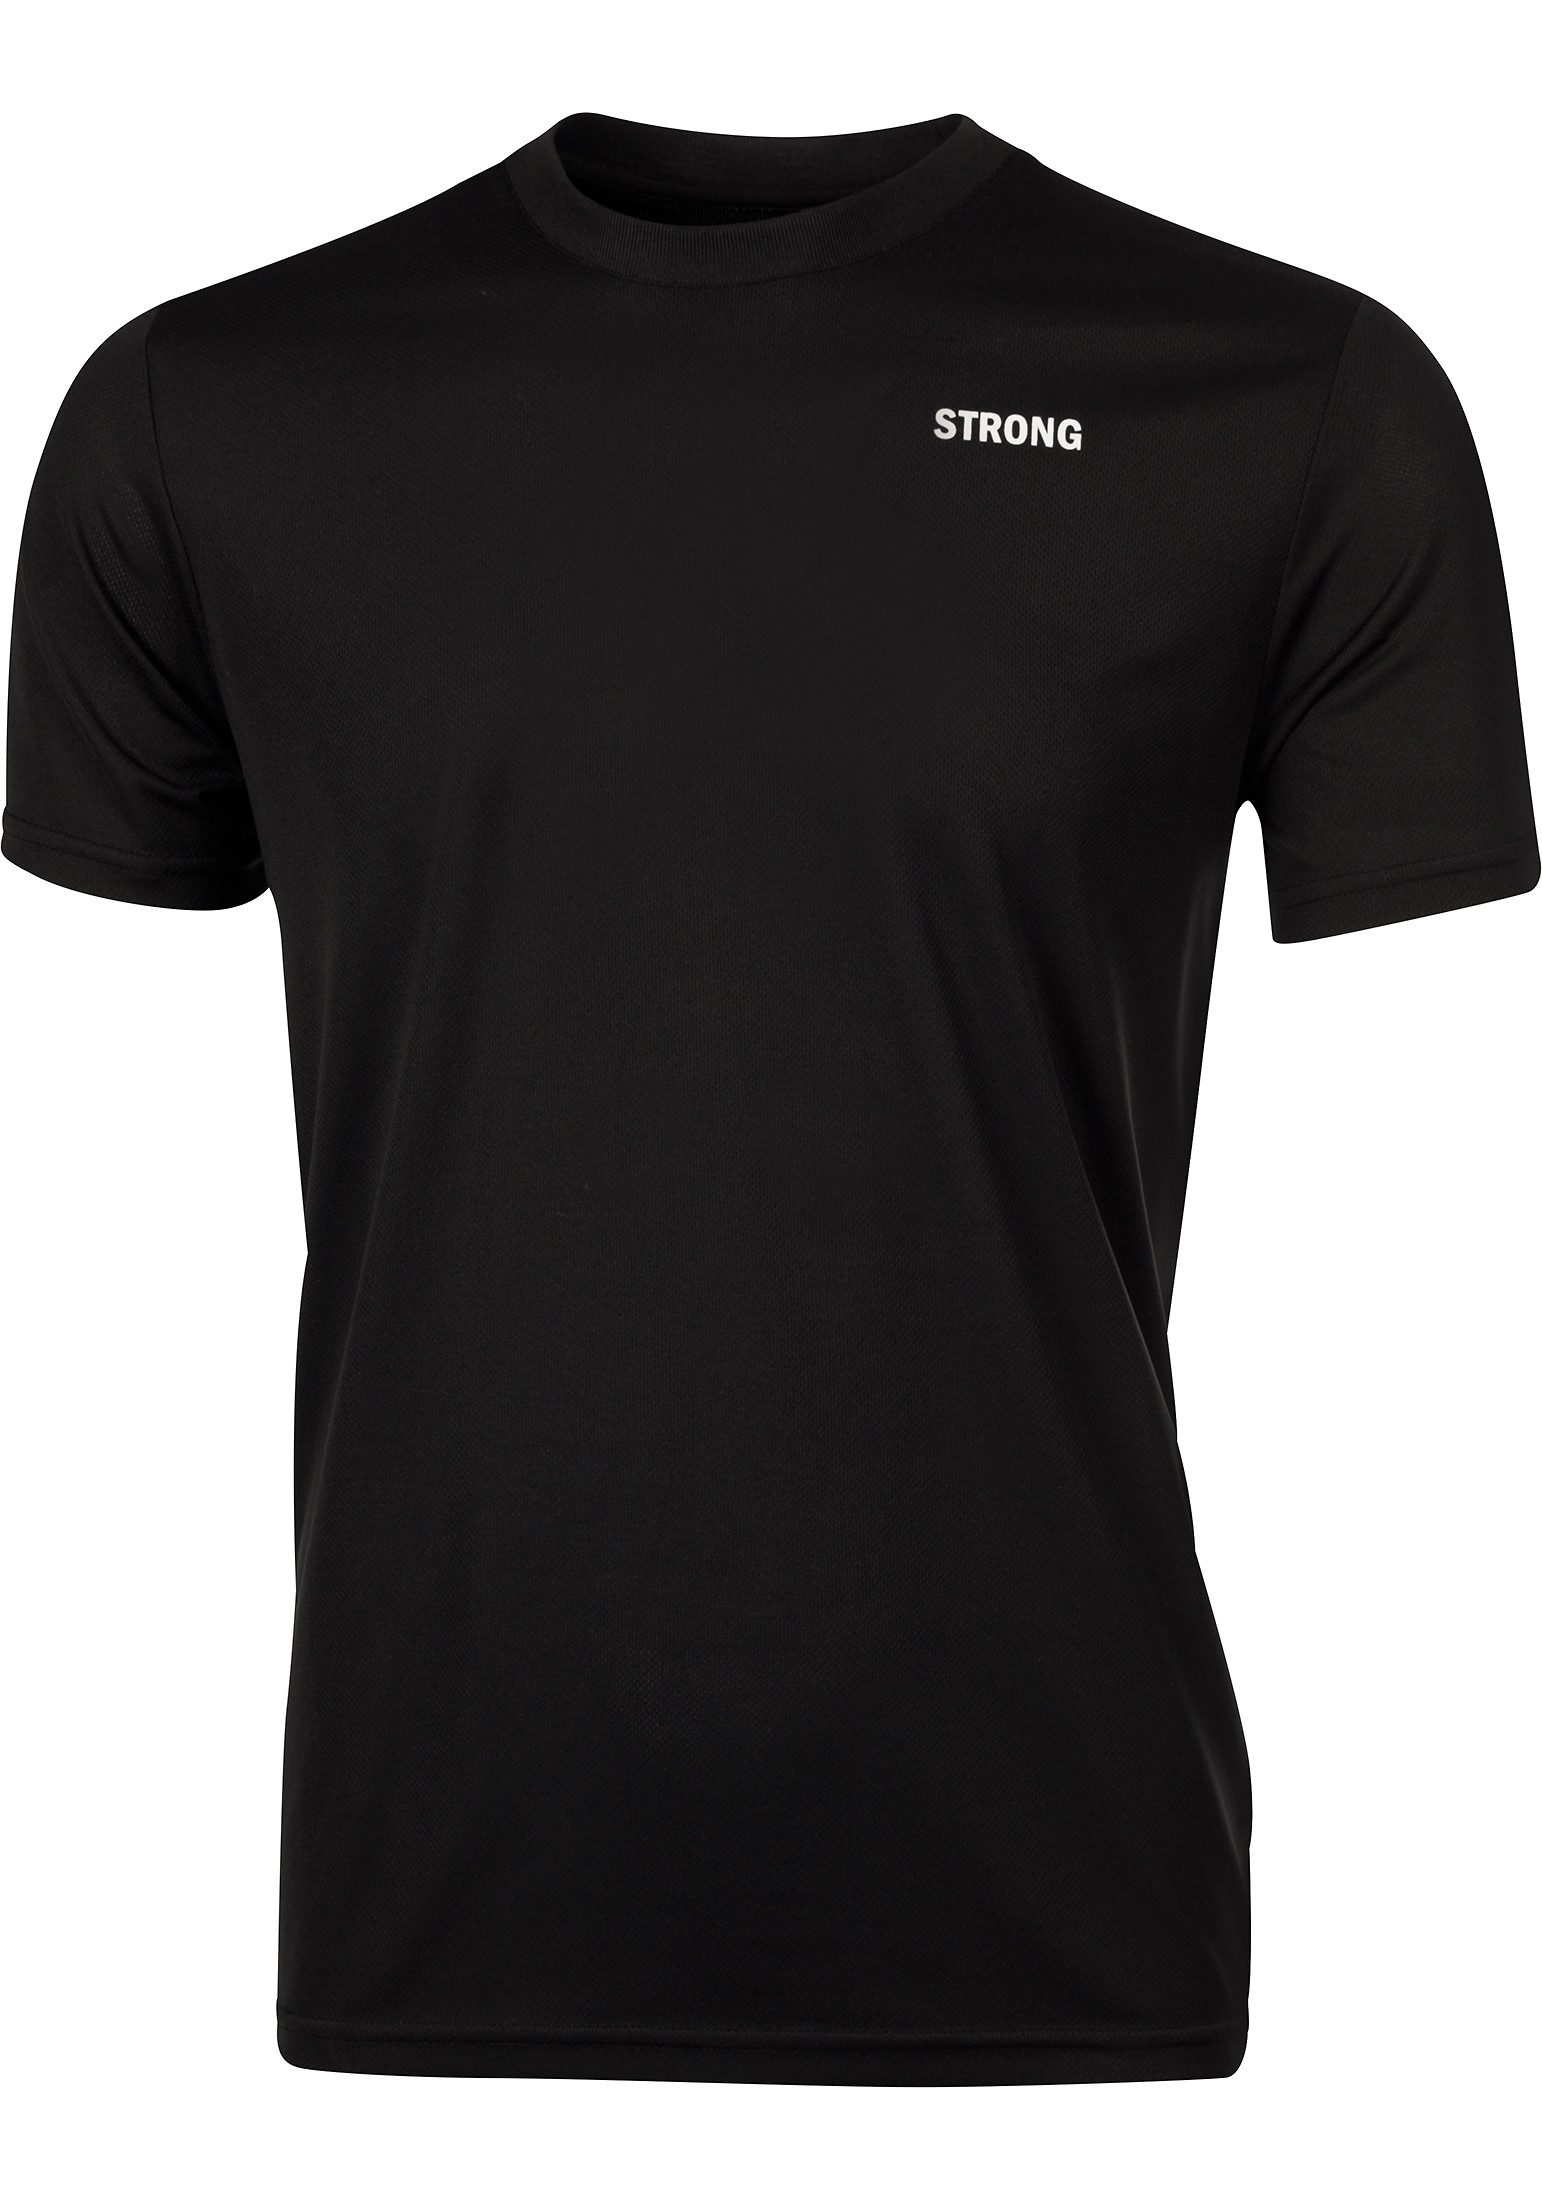 Erima T-Shirt Active T-Shirt Herren